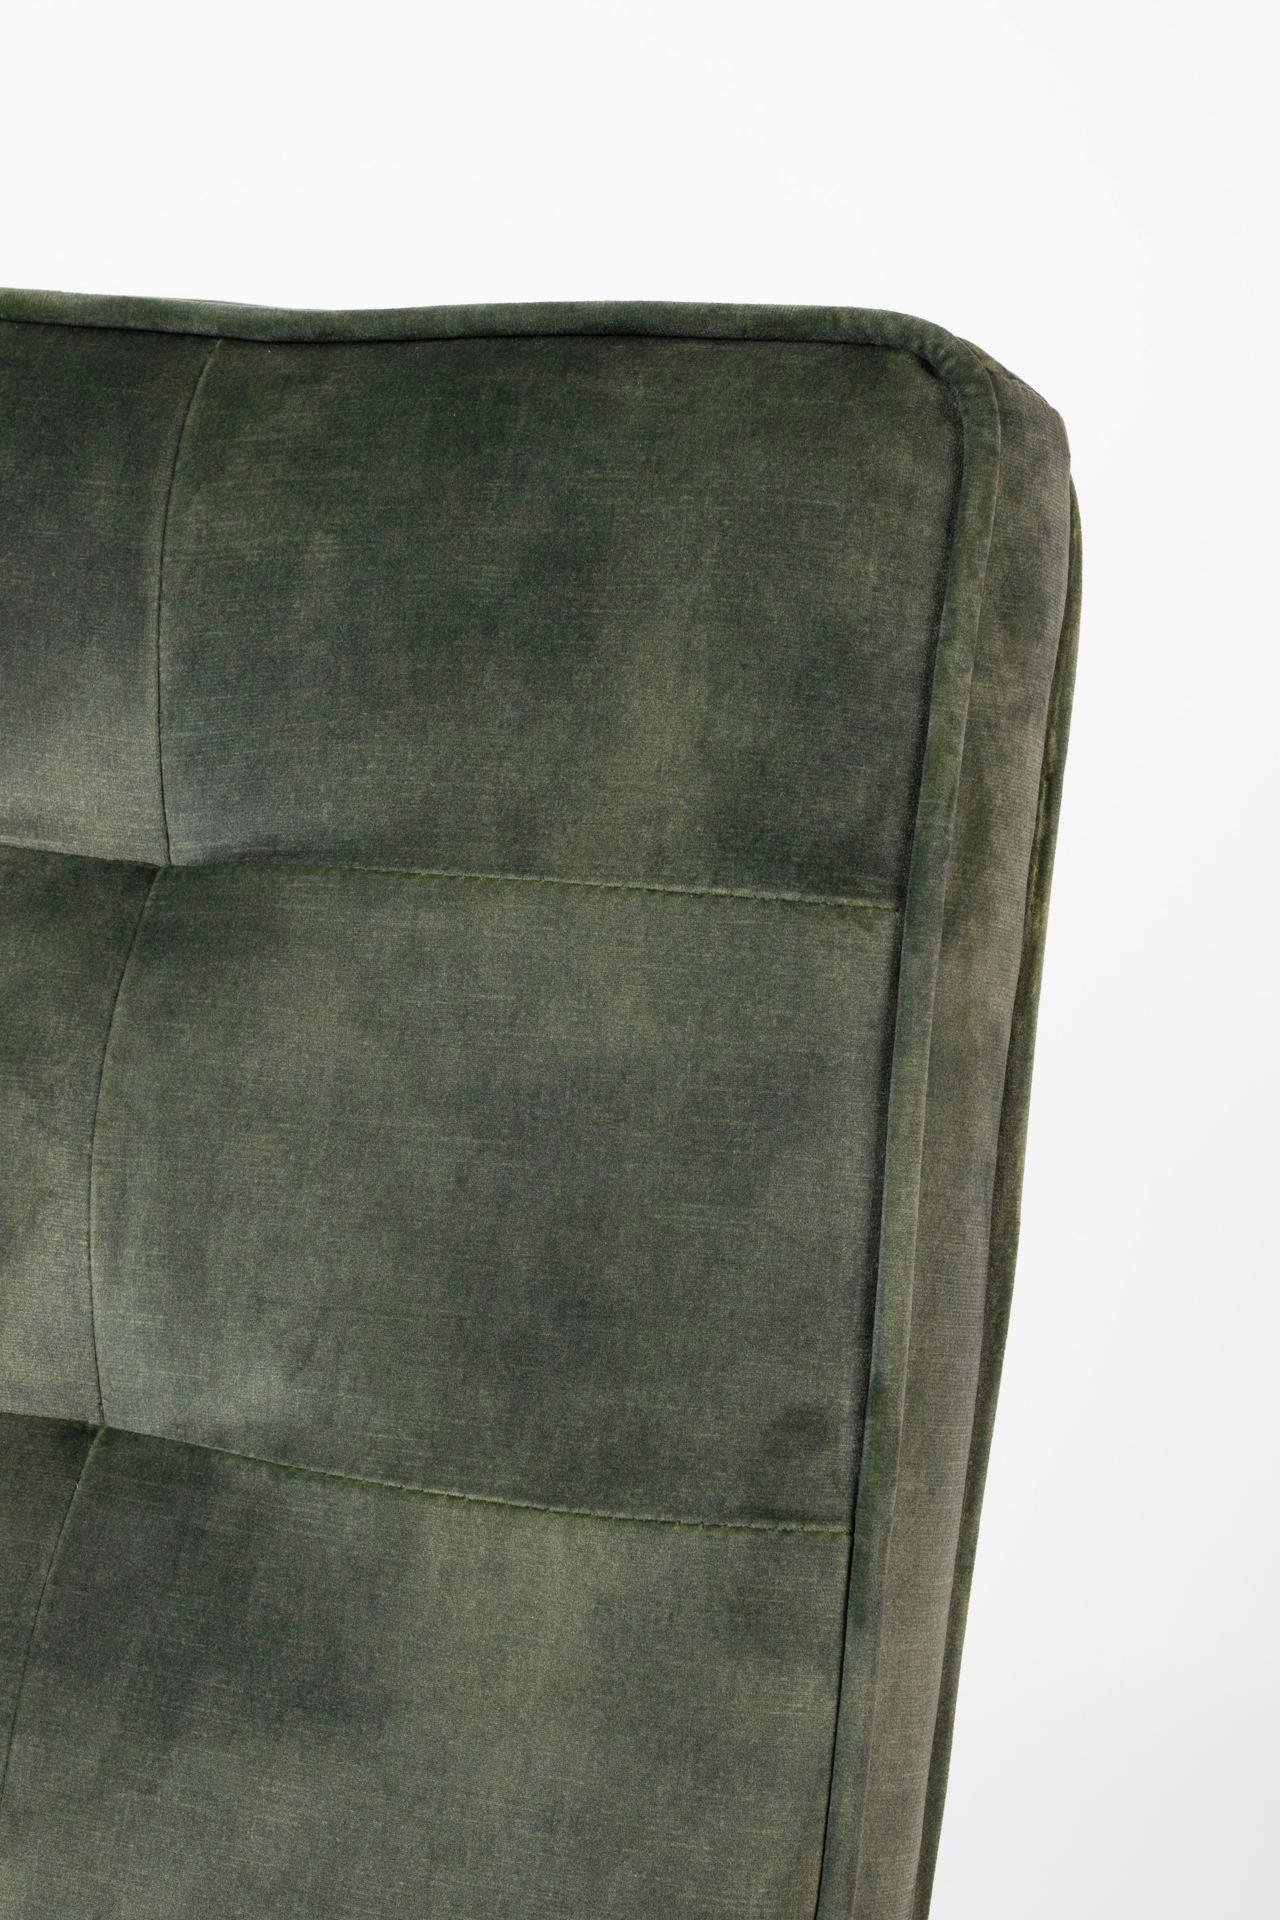 Nancy's Gold Canyon Lounge Chair - Industrieel - Groen - Polyester, Multiplex, Metaal - 69 cm x 55,5 cm x 75 cm